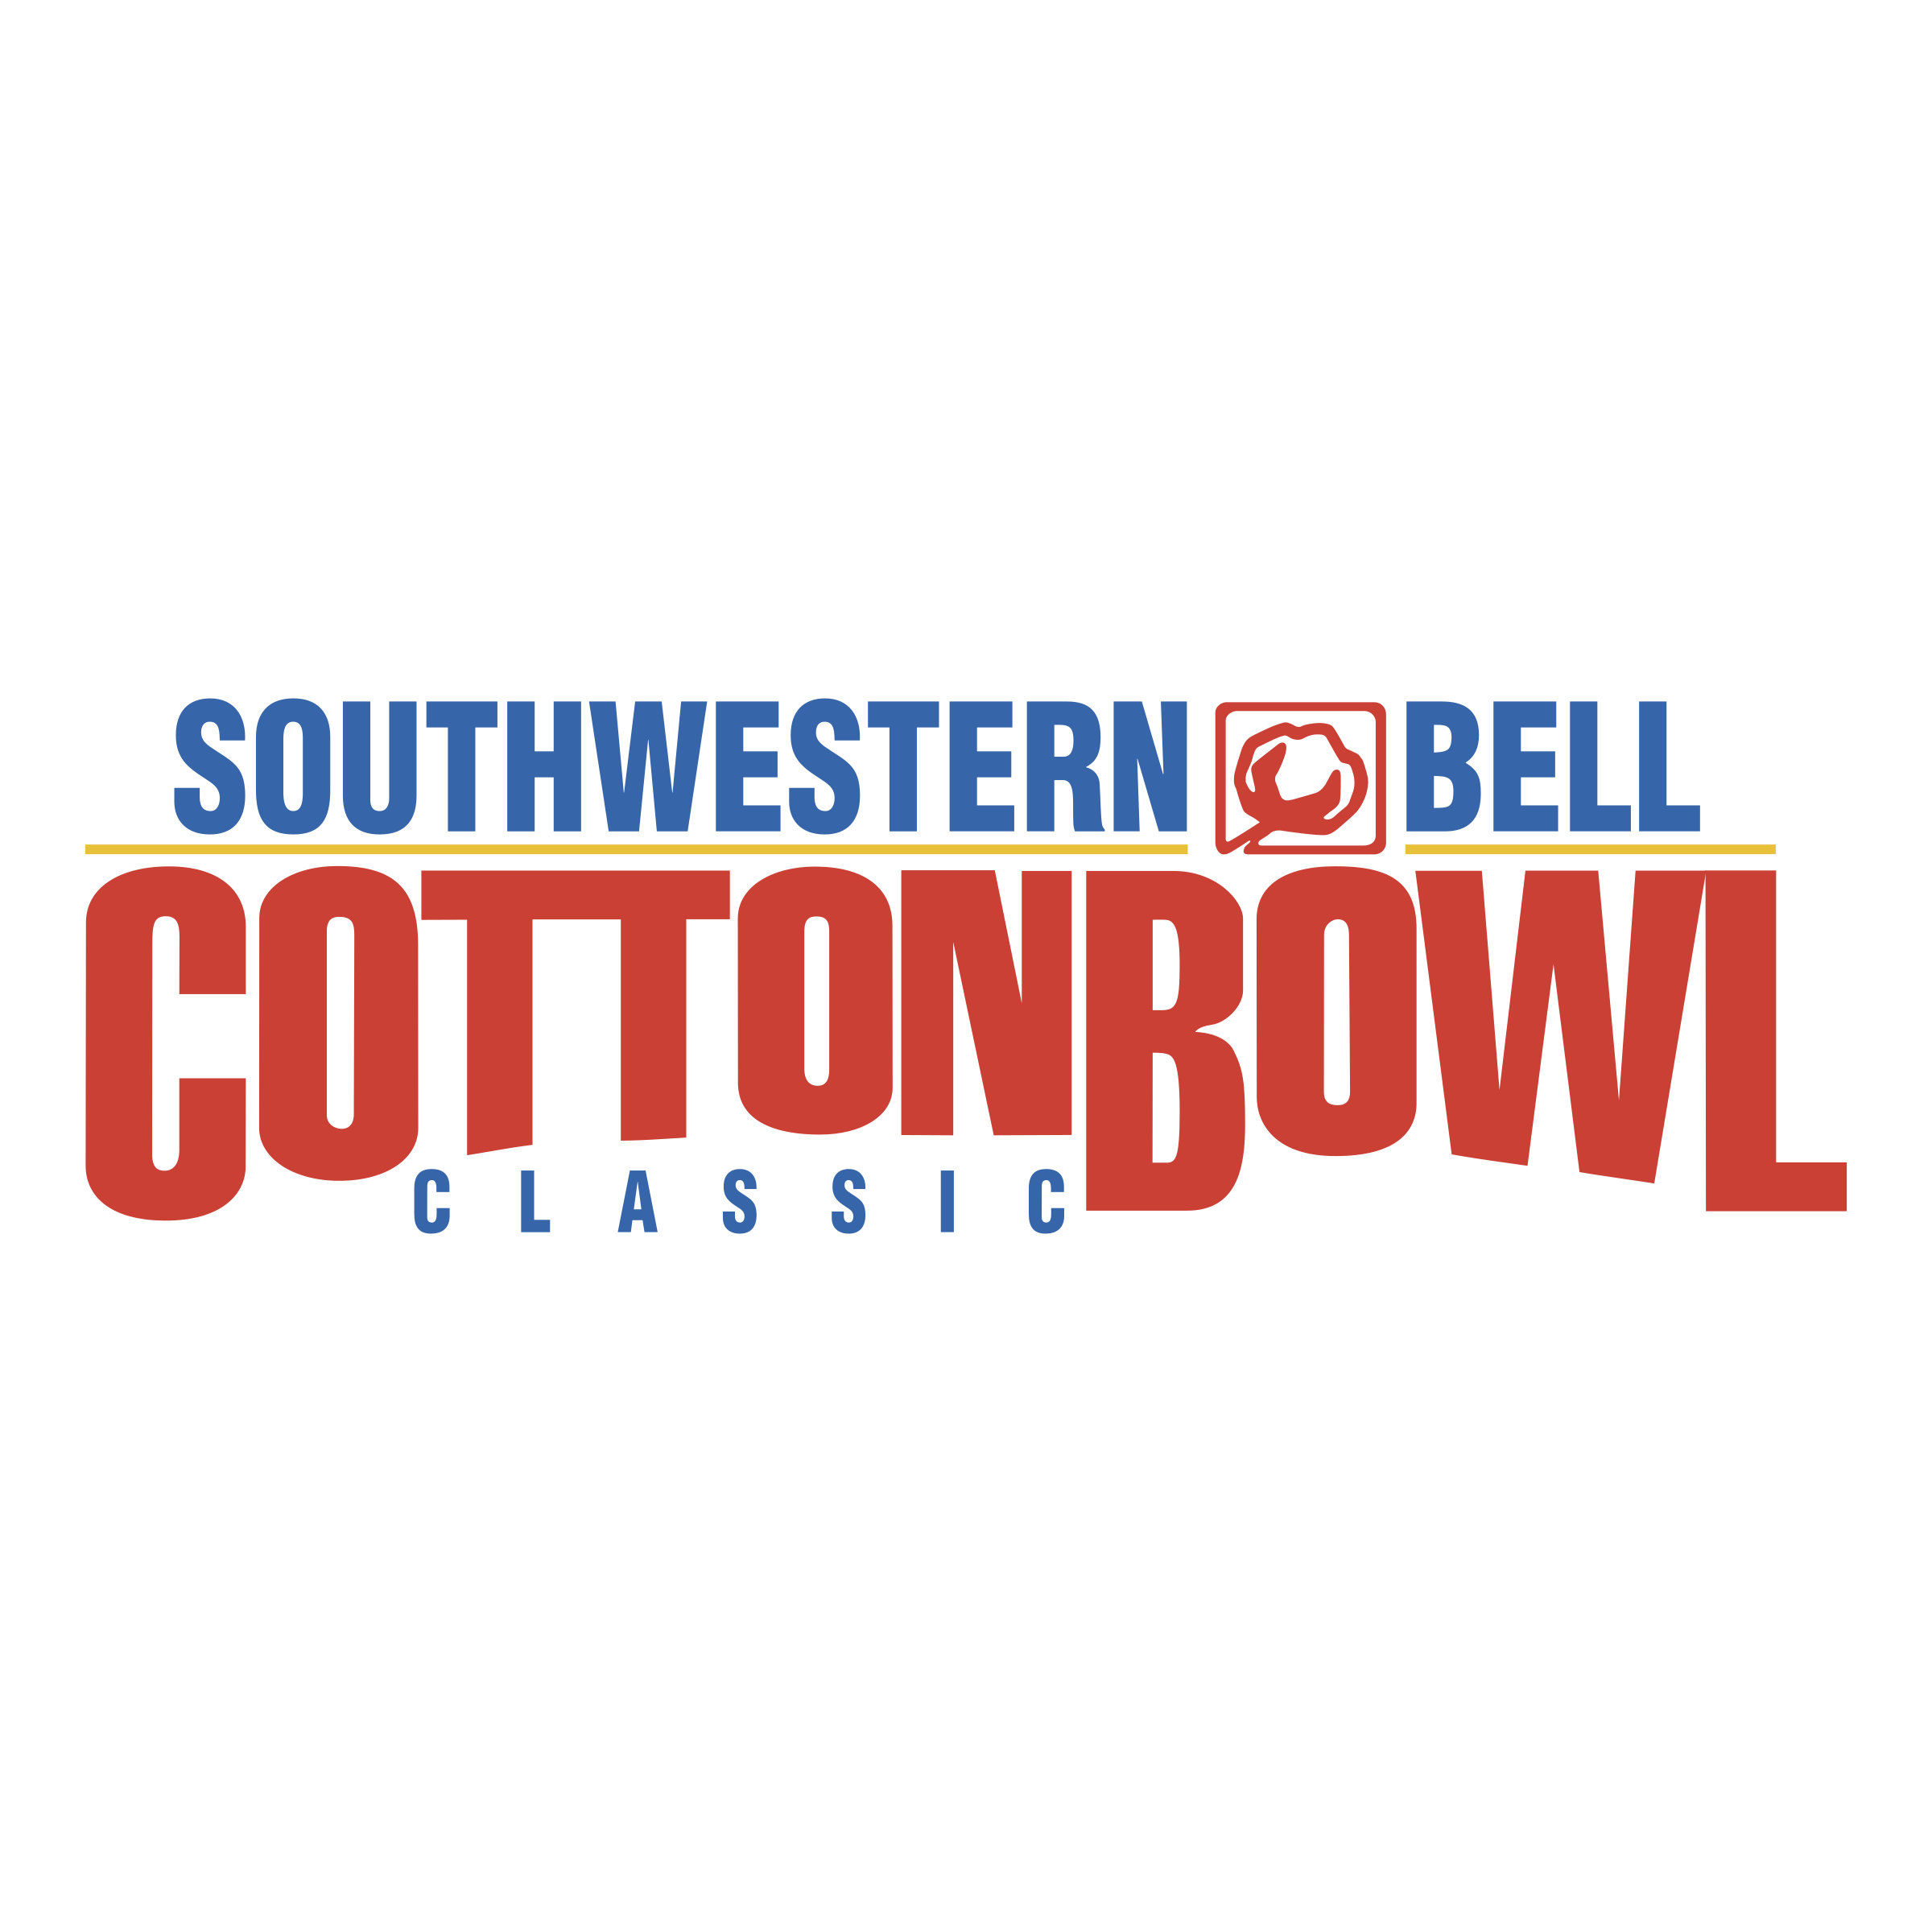 Cotton Bowl Logo - Cotton Bowl Classic Logo PNG Transparent & SVG Vector - Freebie Supply